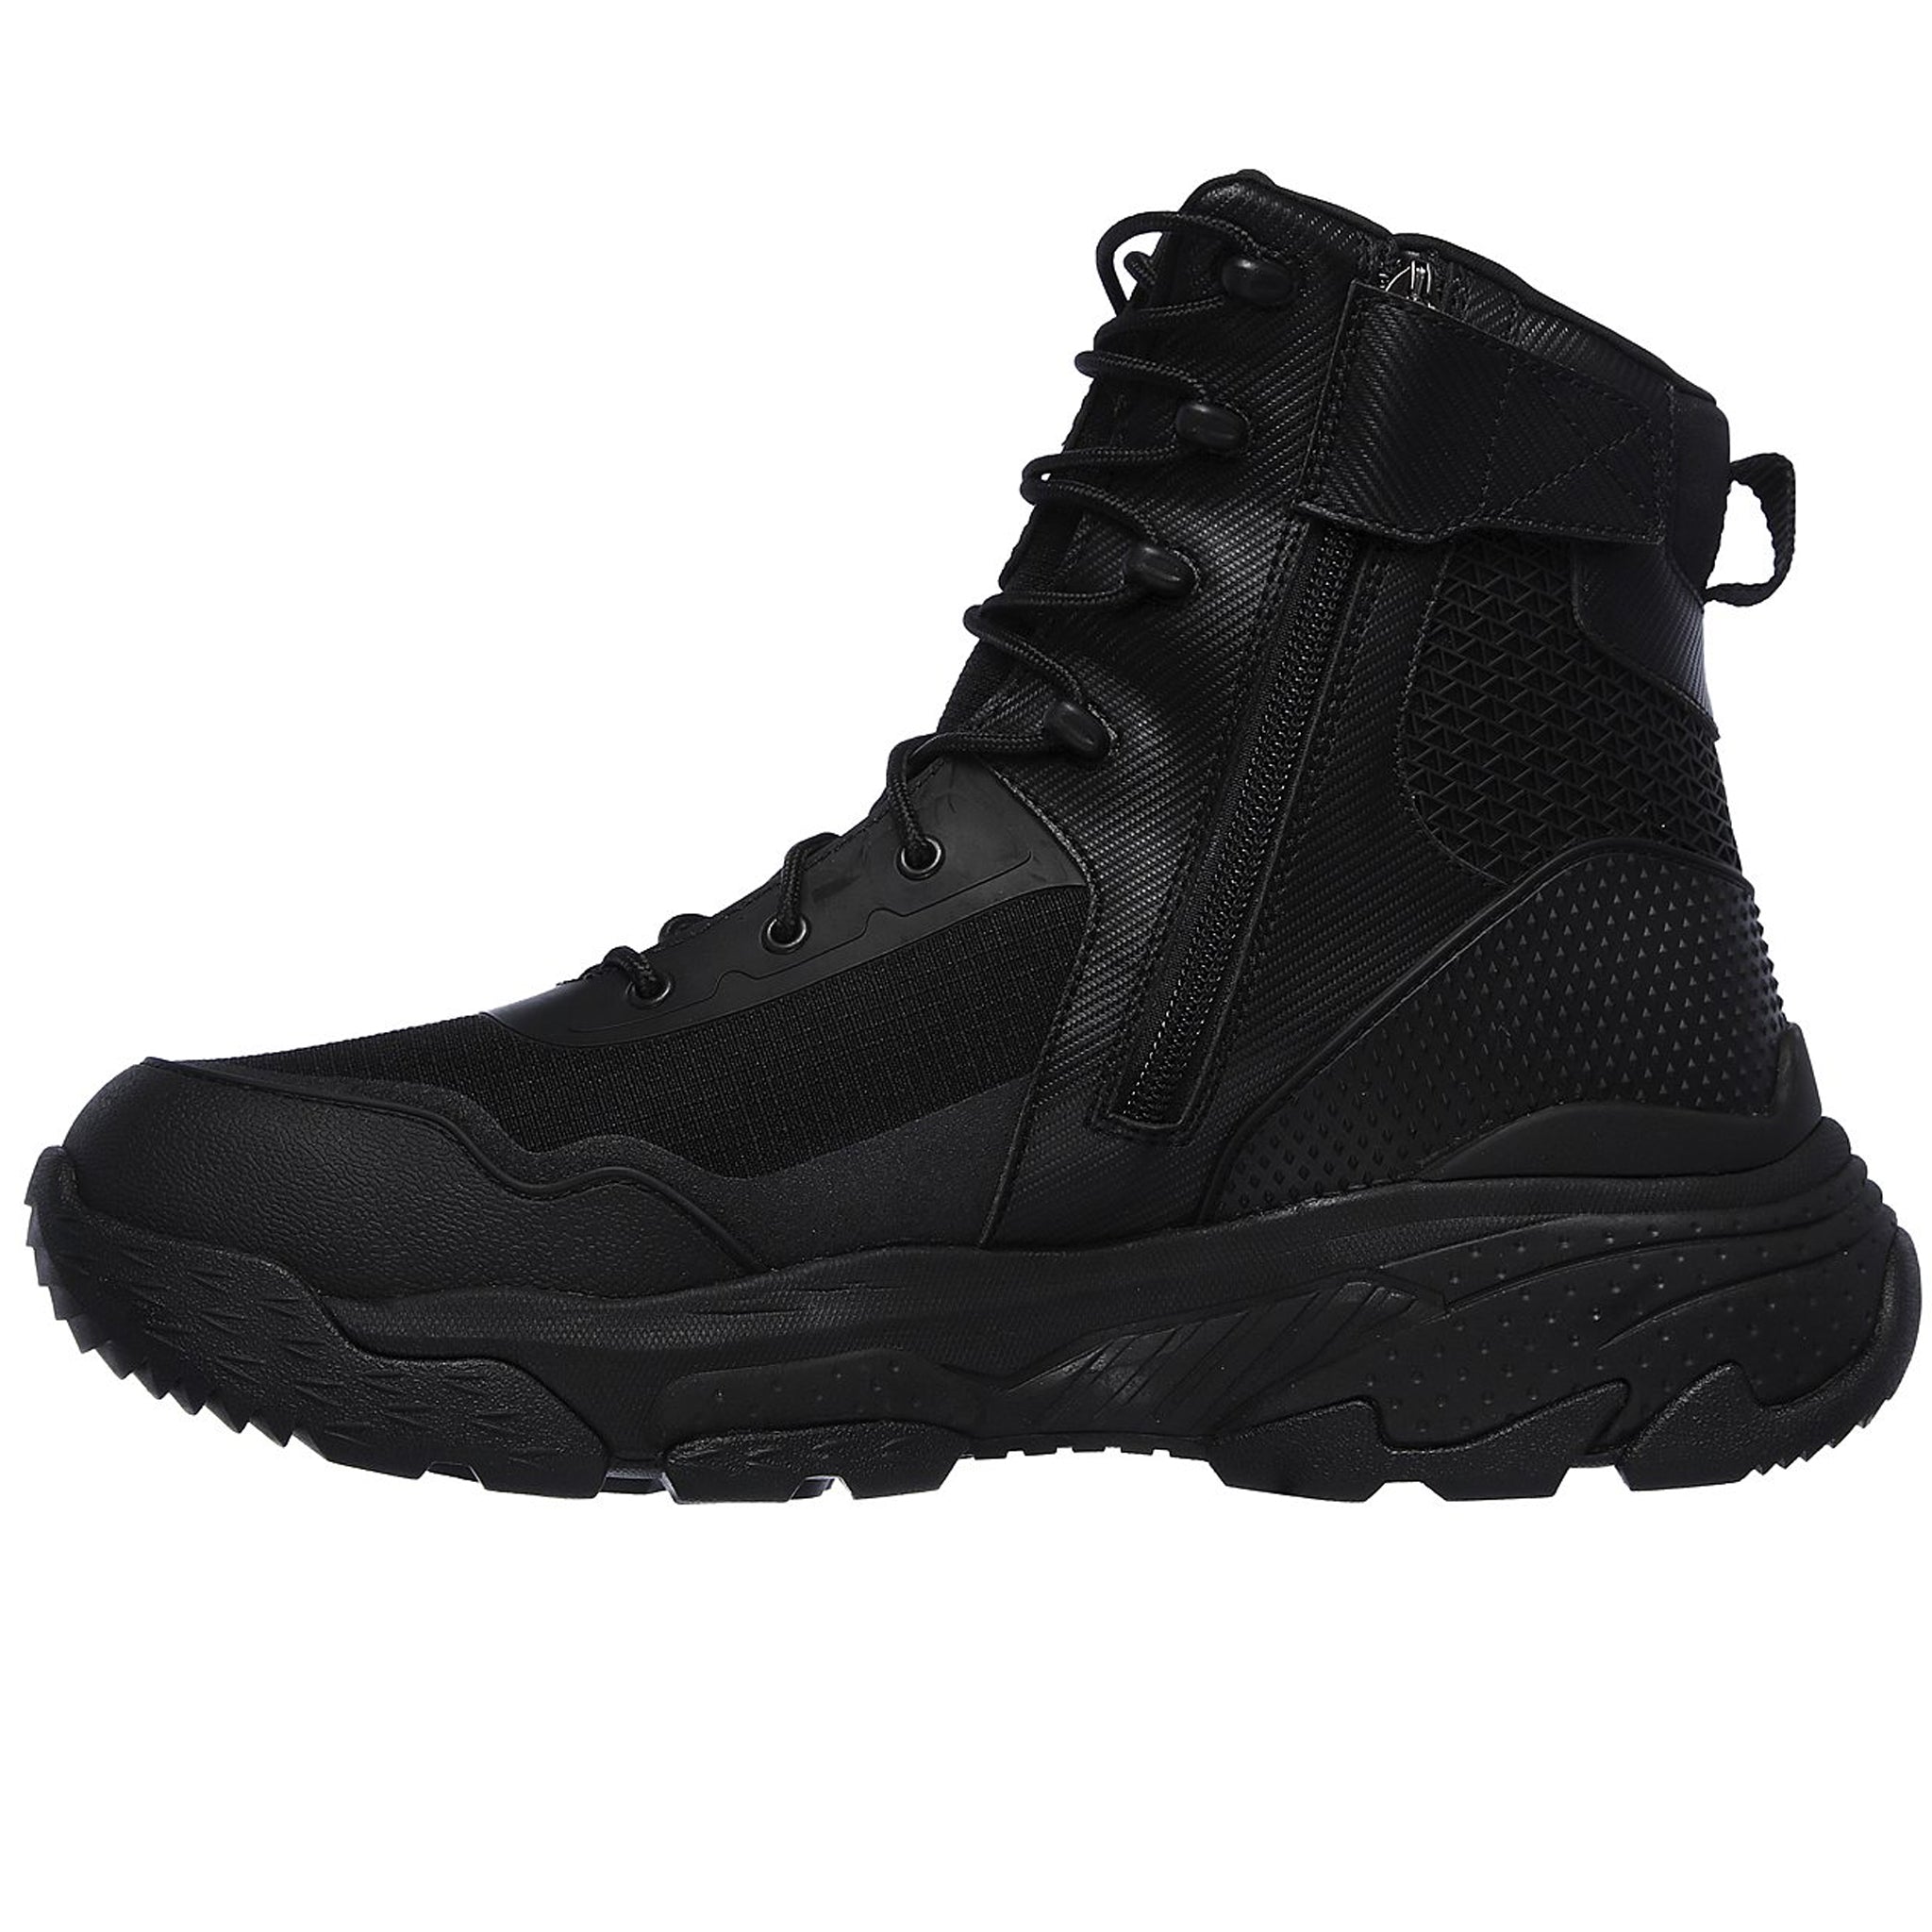 Skechers Men's 77515 Waterproof Black Tactical Work Boots – That Shoe Store and More